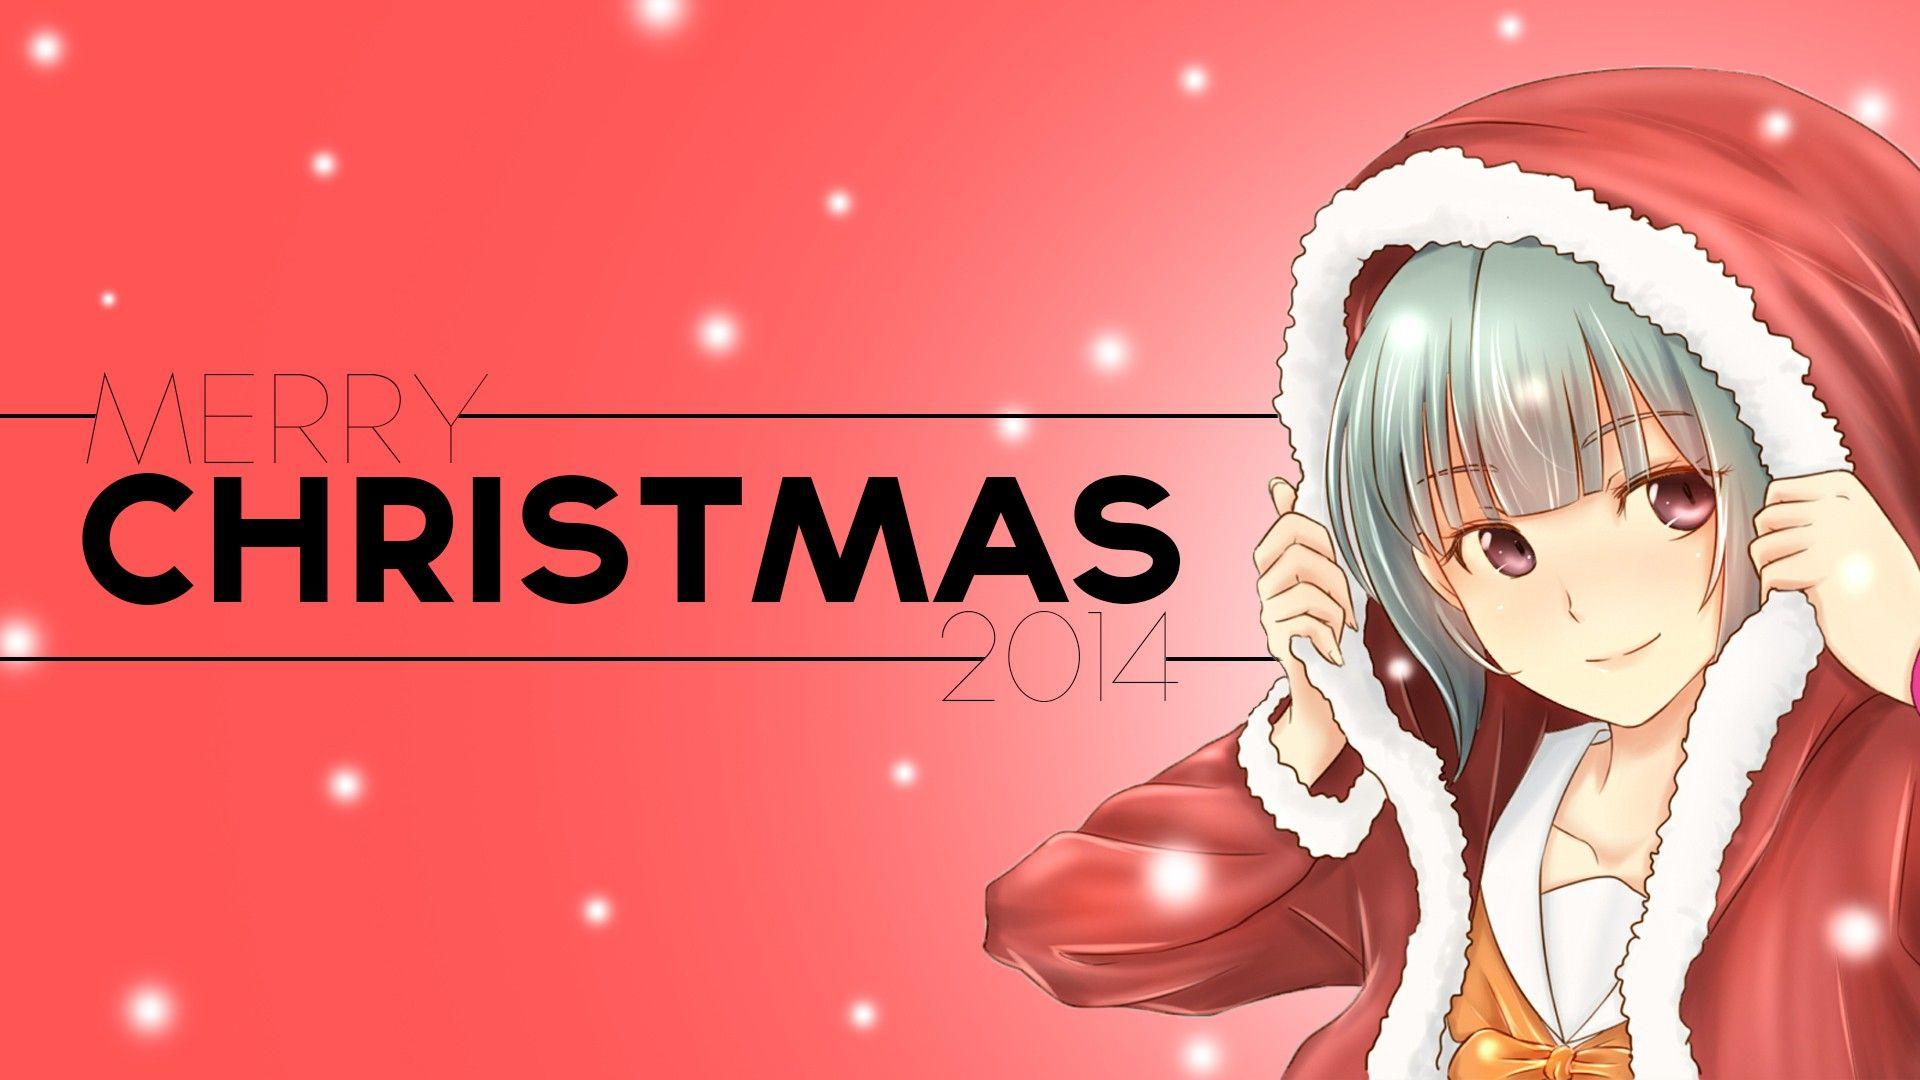 Cute Anime Girl Christmas wallpapers HD | PixelsTalk.Net